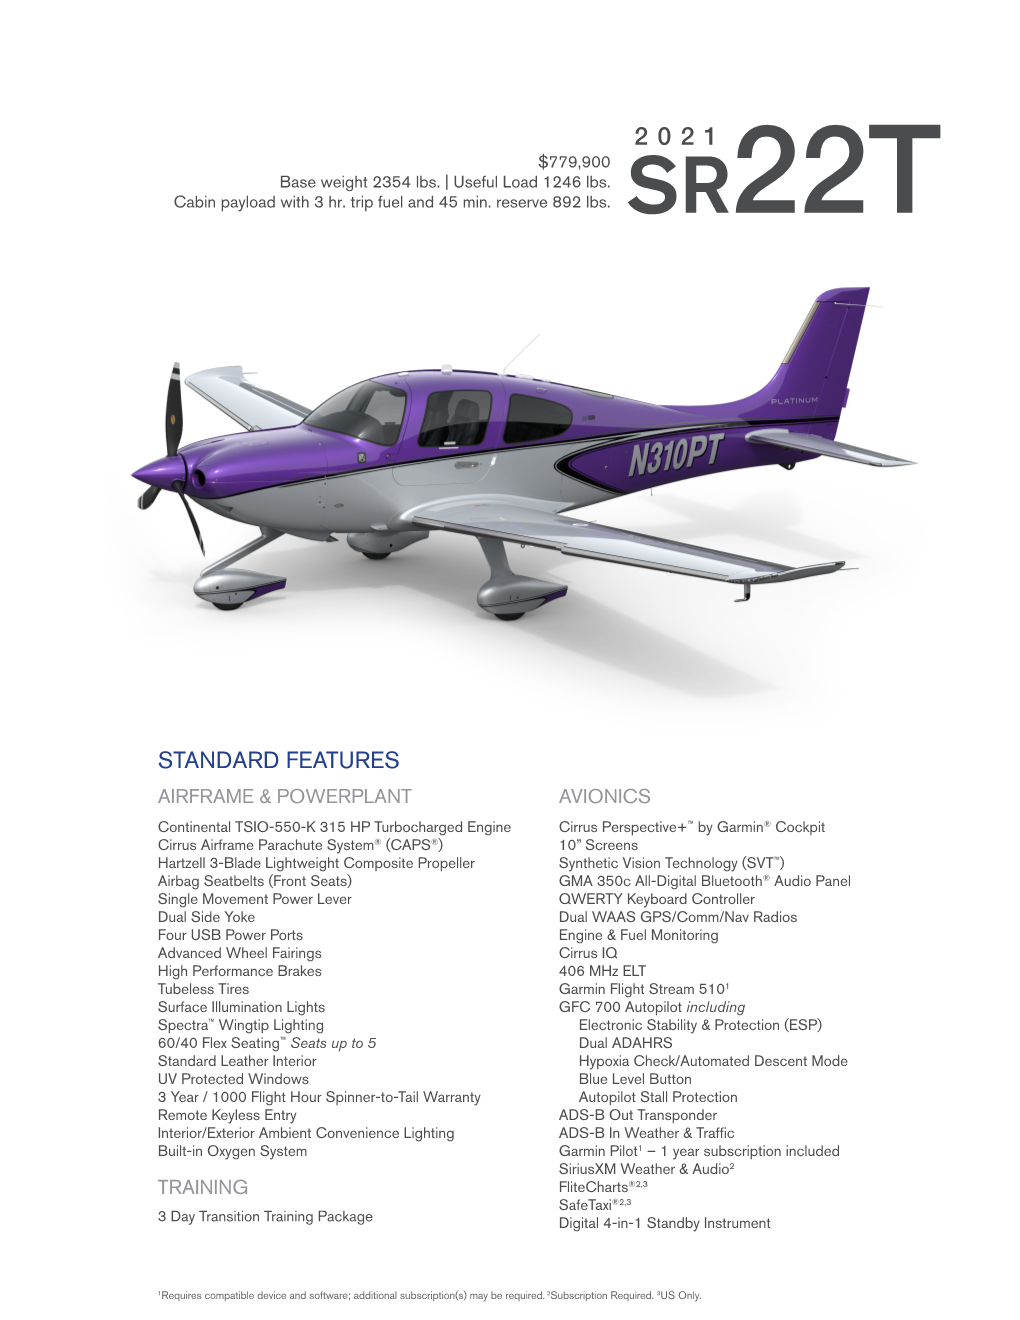 2021 SR22T Domestic Pricelist